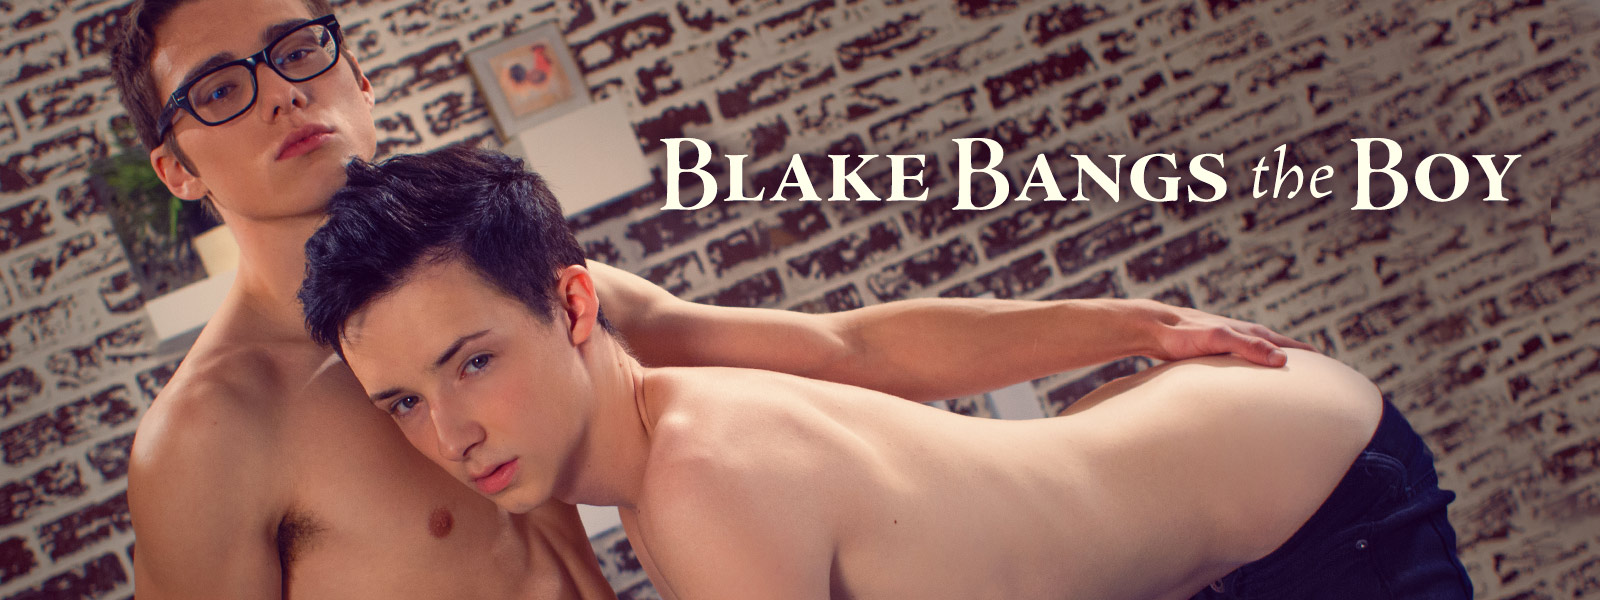 Blake Bangs the Boy